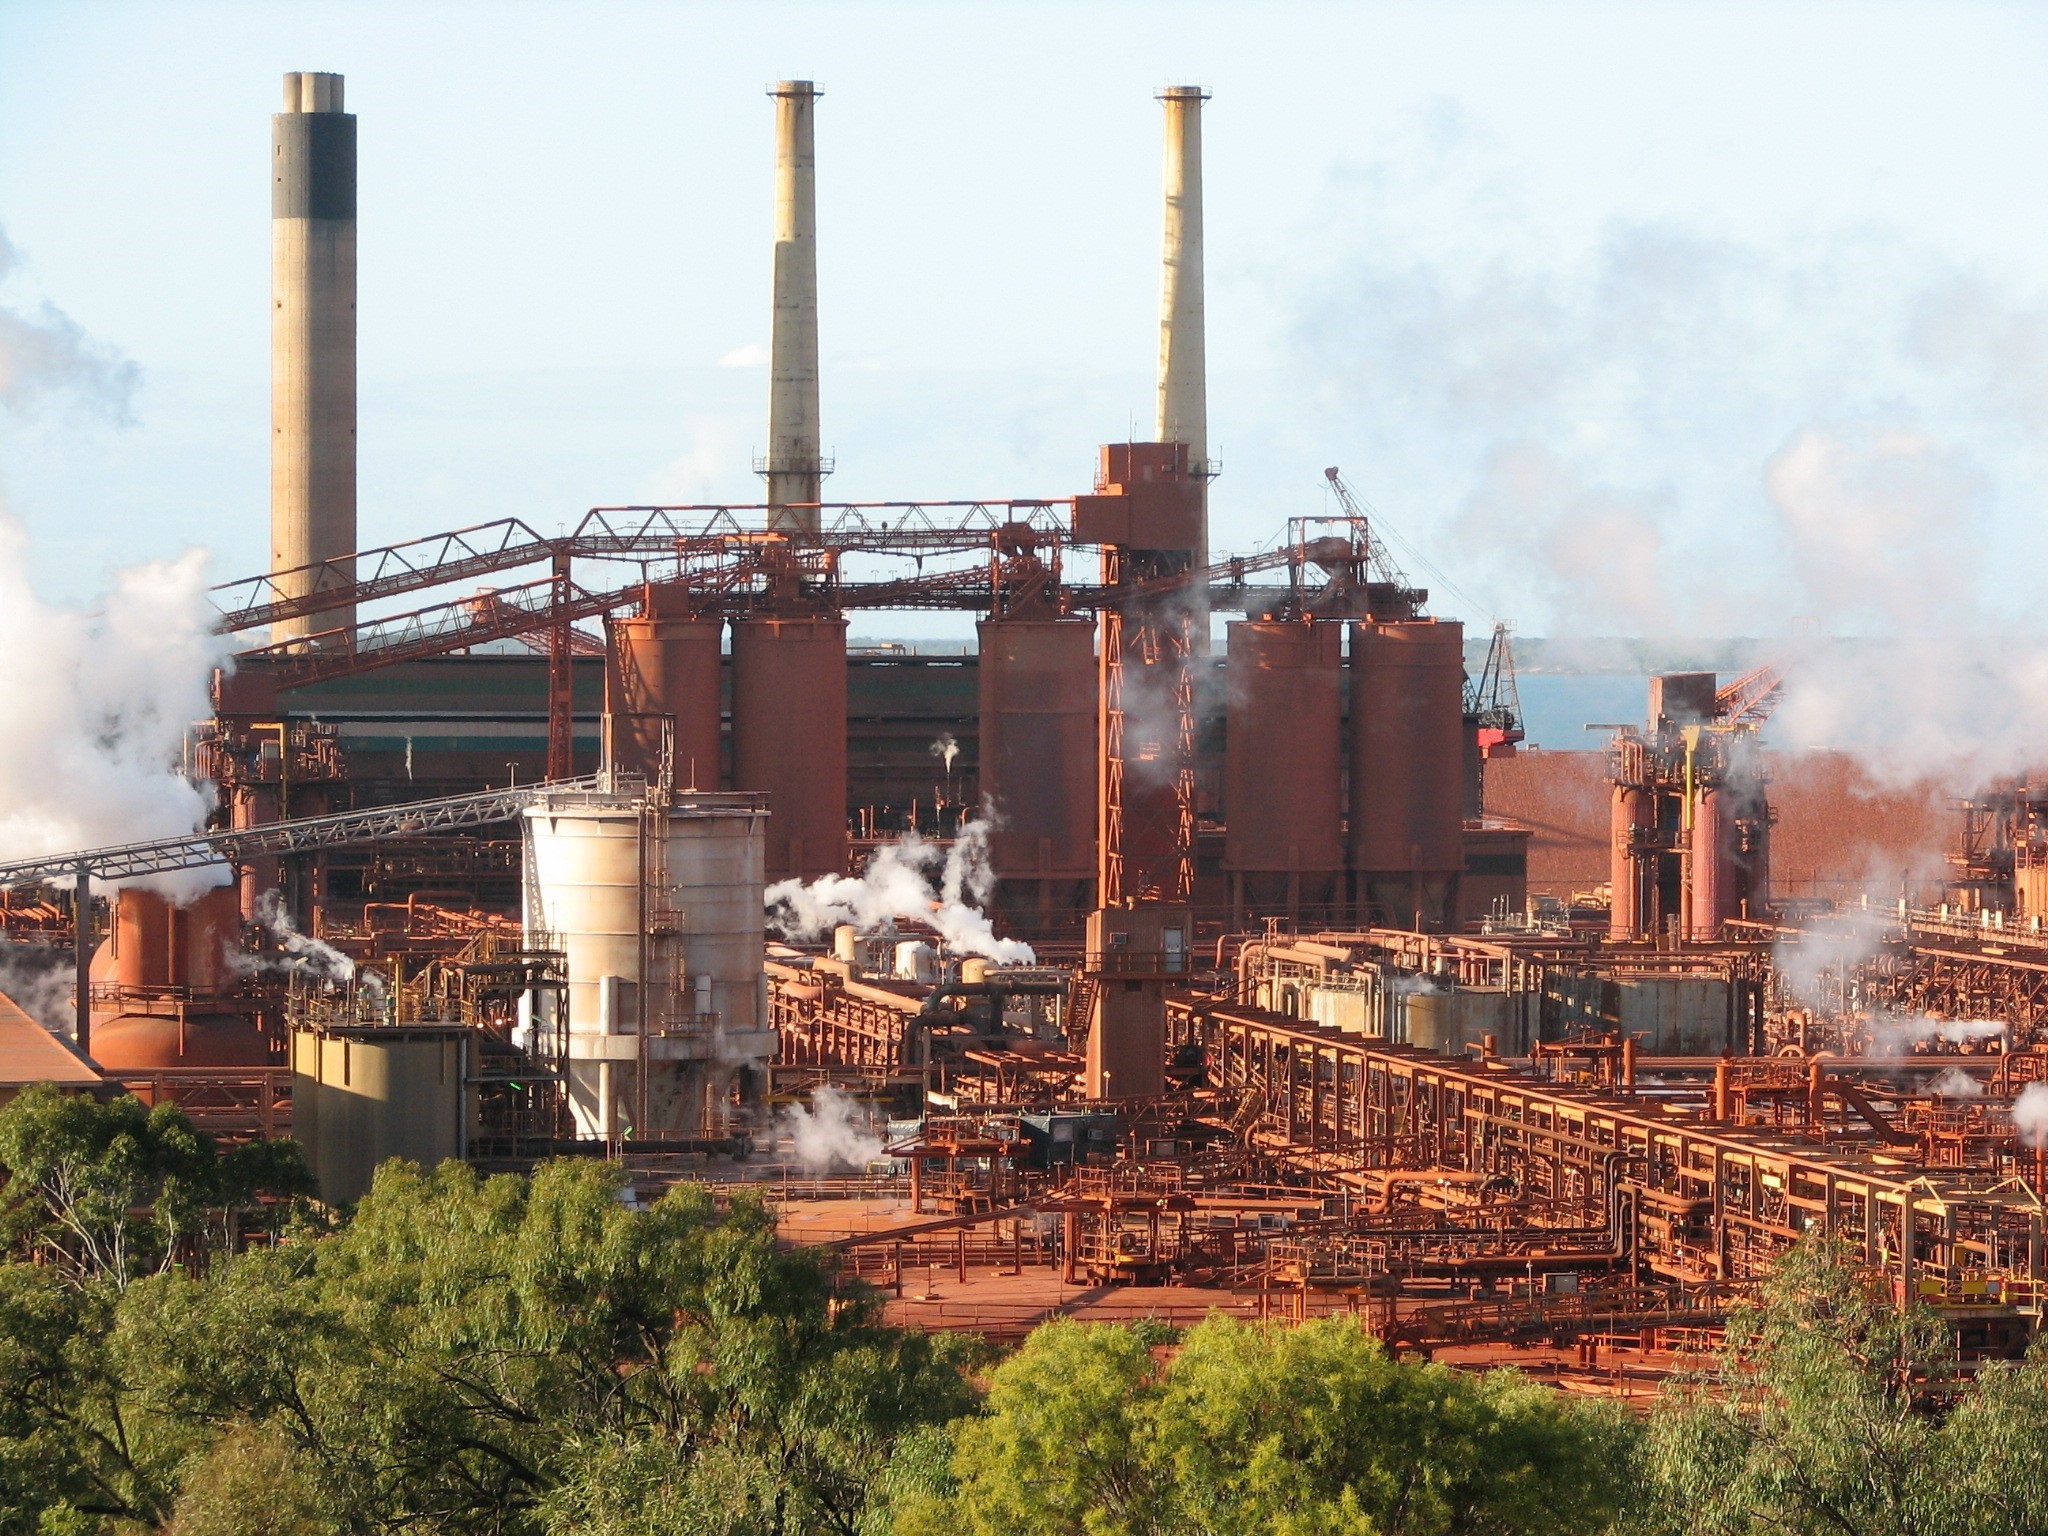 Gladstone power plant compensations hamper federal government’s coal price cap talks, Alcircle News